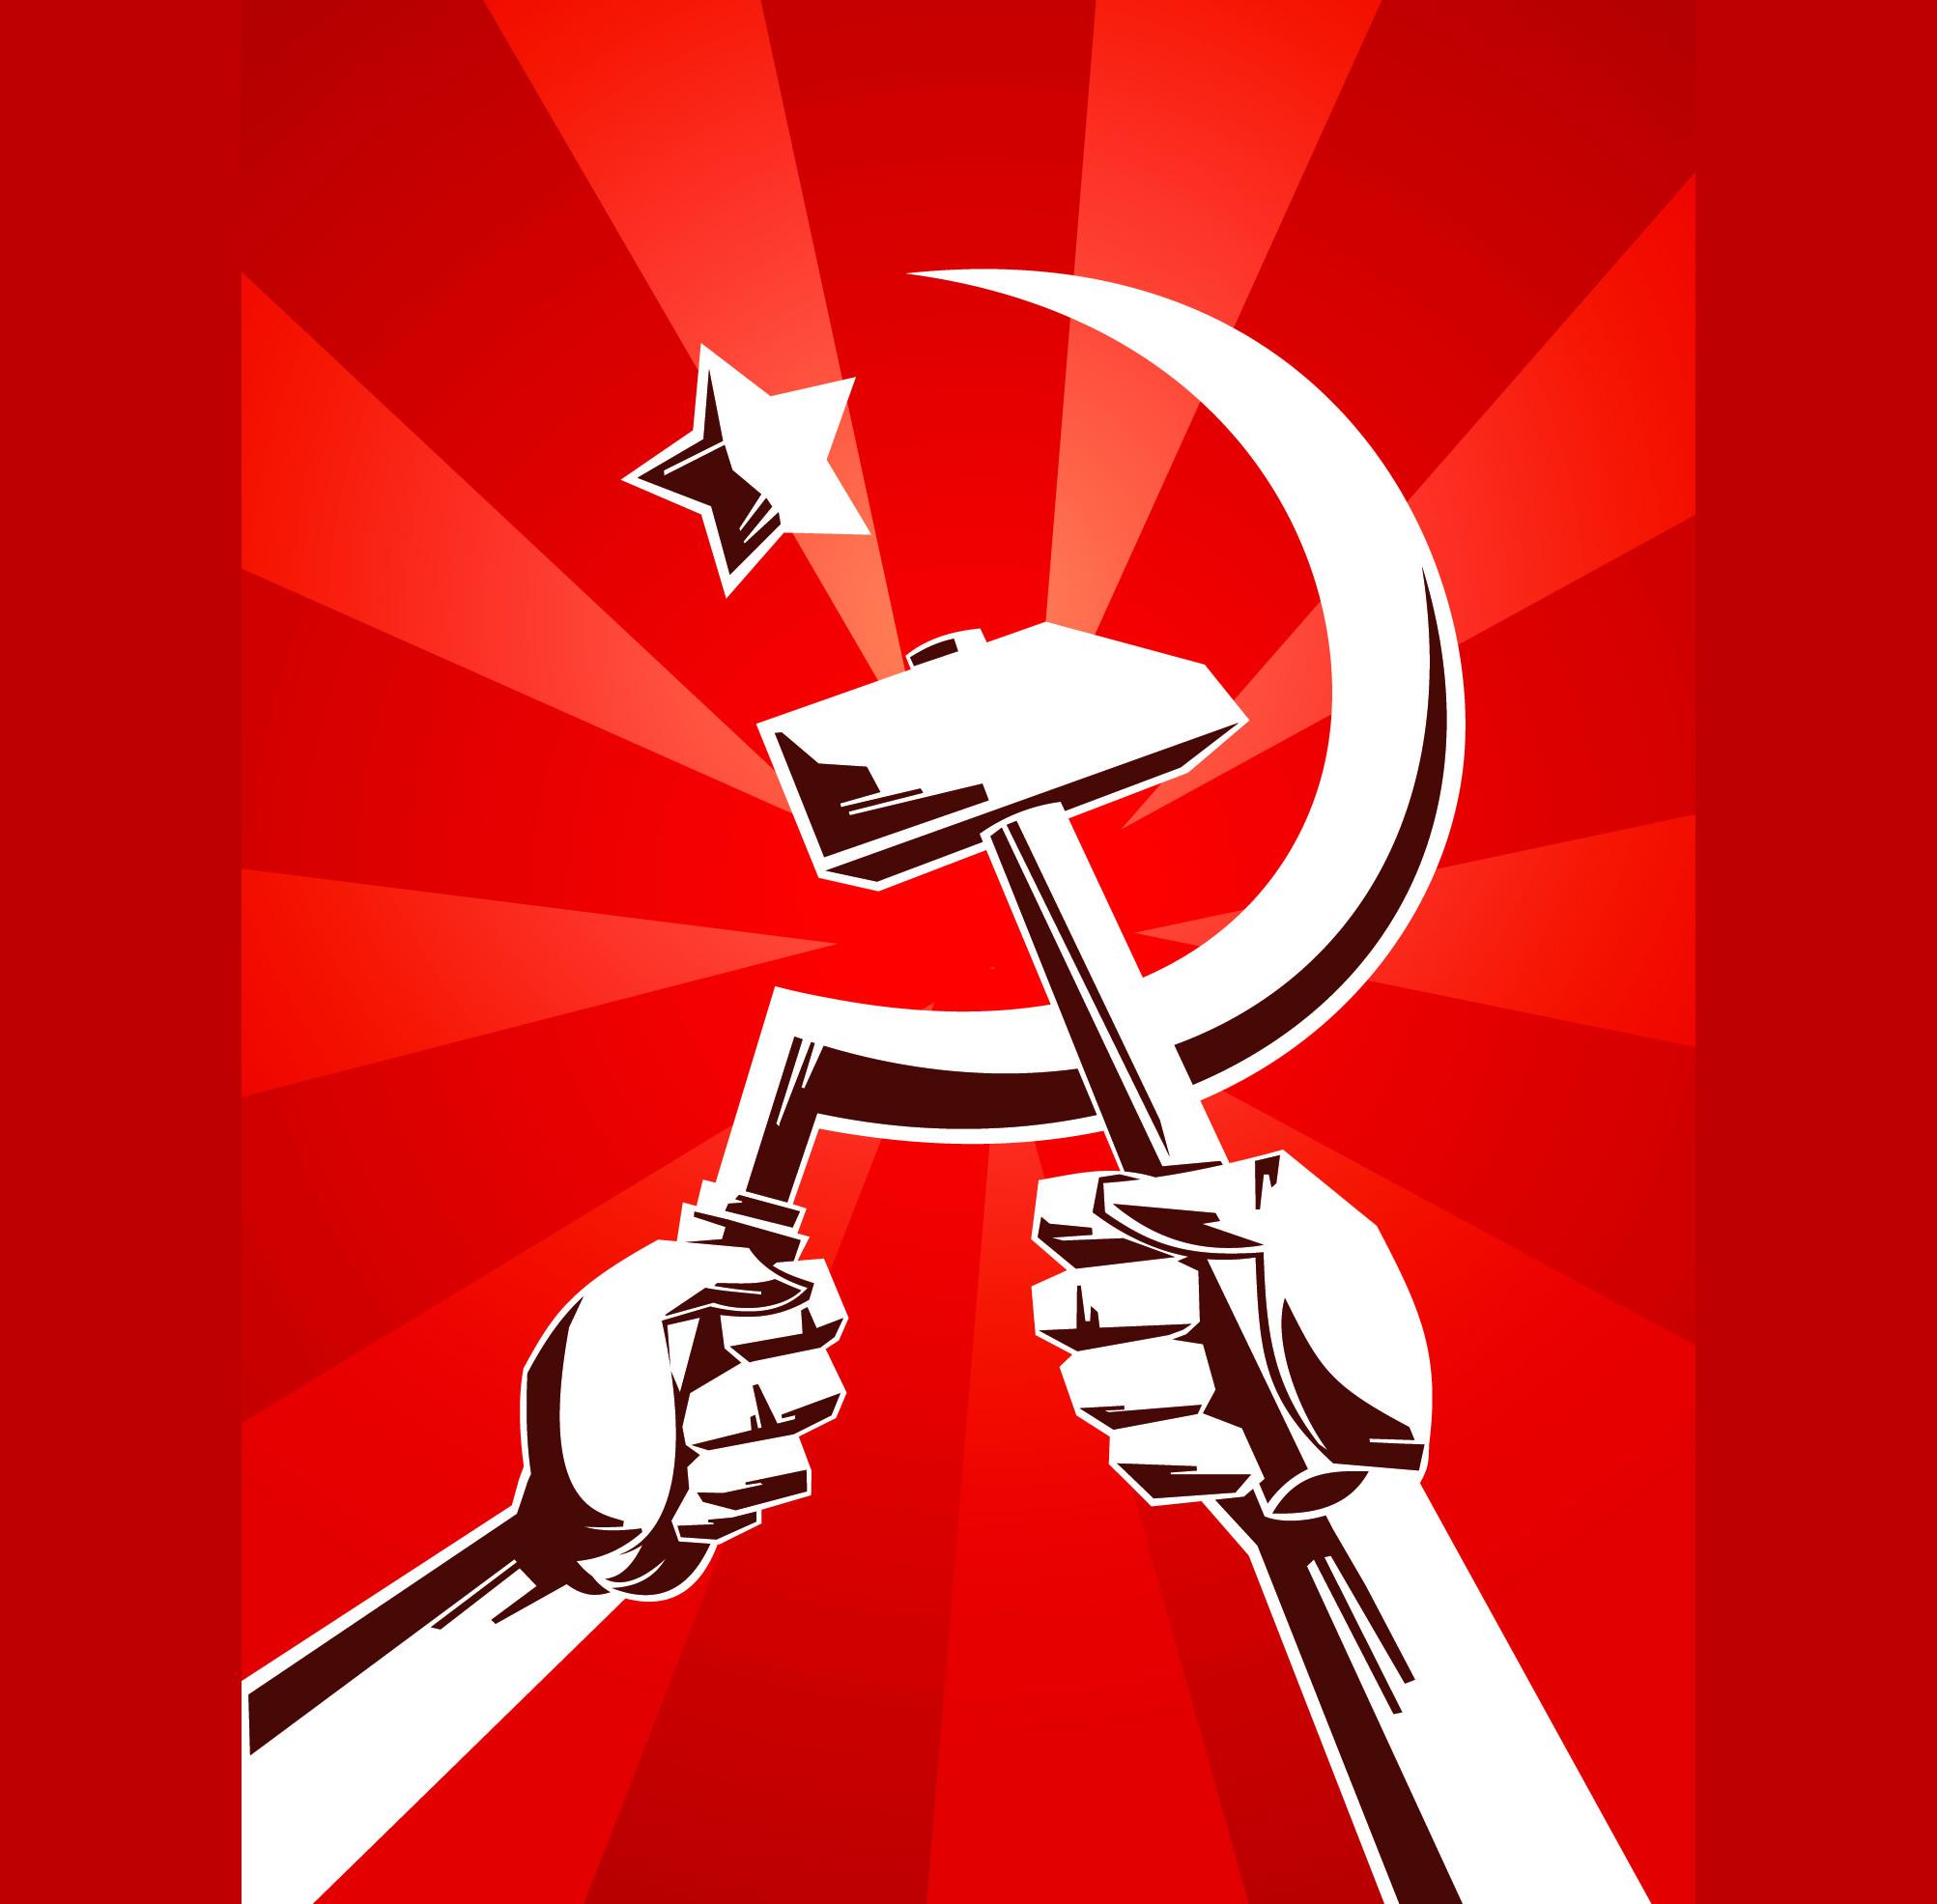 O comunista e o palmito